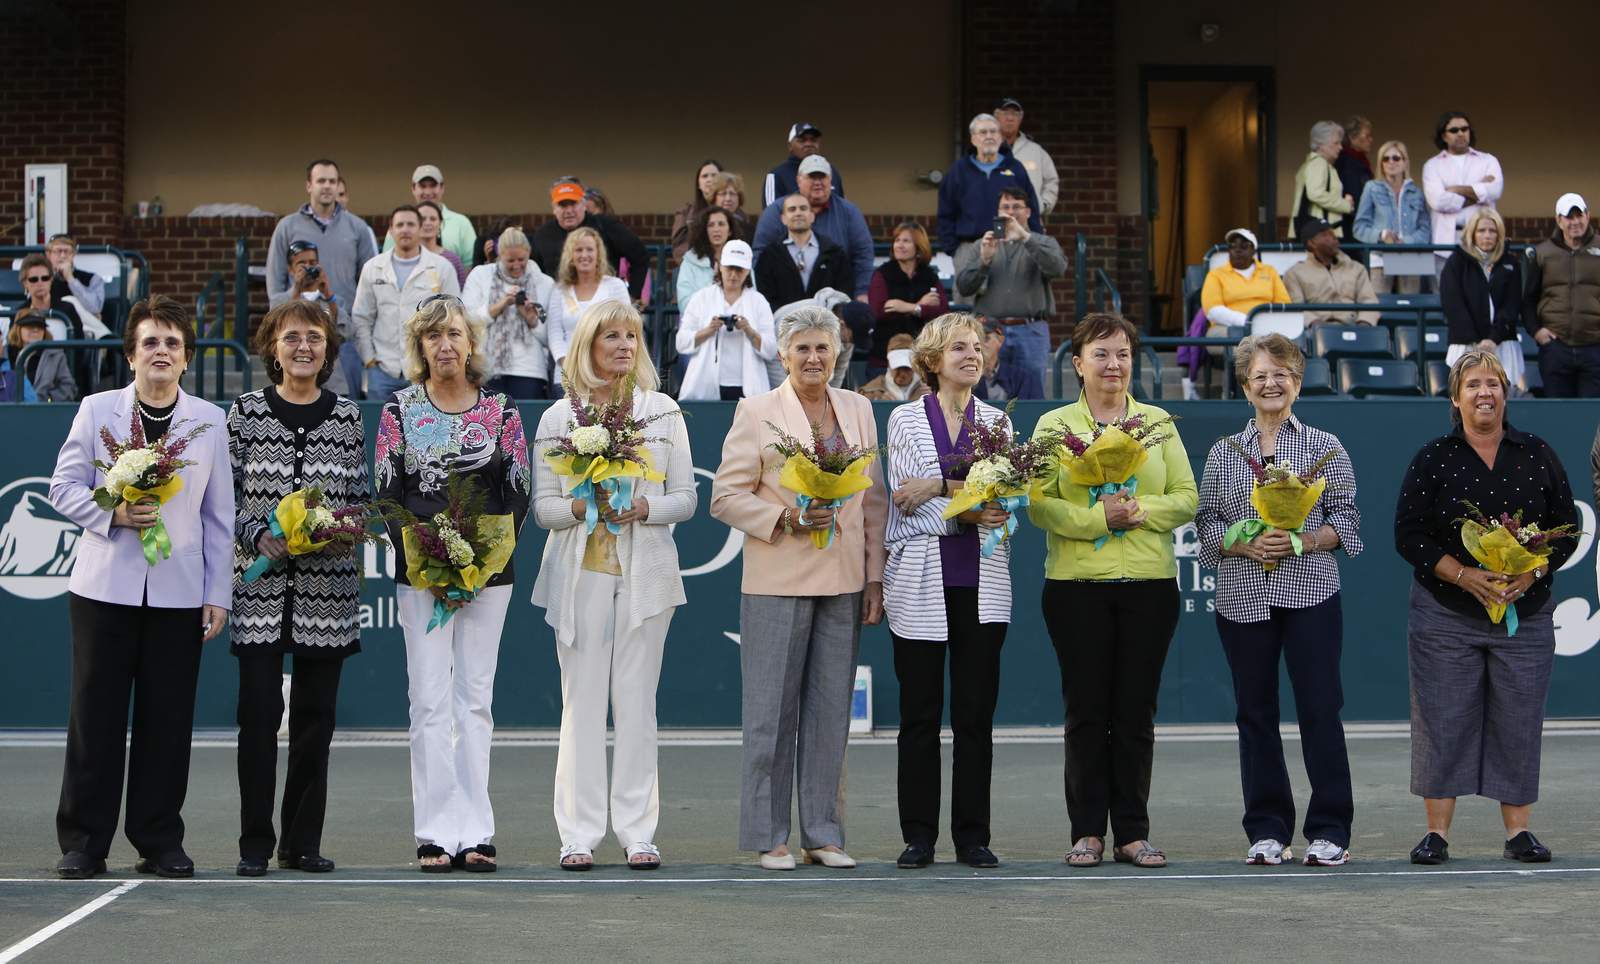 King, Original 9 mark 50 years of women's pro tennis tour